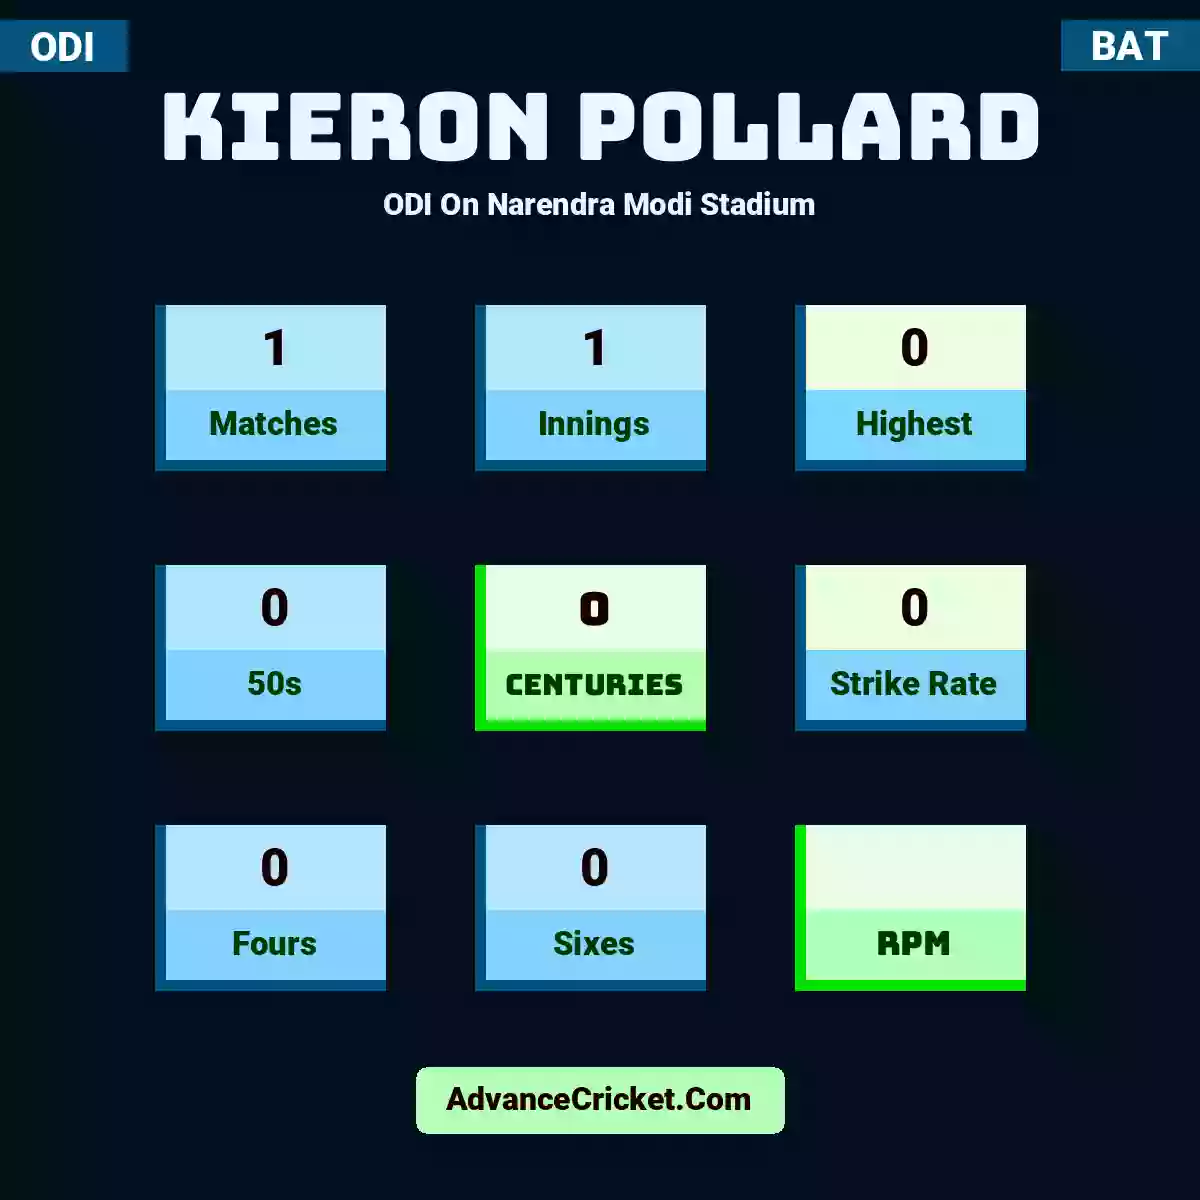 Kieron Pollard ODI  On Narendra Modi Stadium, Kieron Pollard played 1 matches, scored 0 runs as highest, 0 half-centuries, and 0 centuries, with a strike rate of 0. K.Pollard hit 0 fours and 0 sixes.